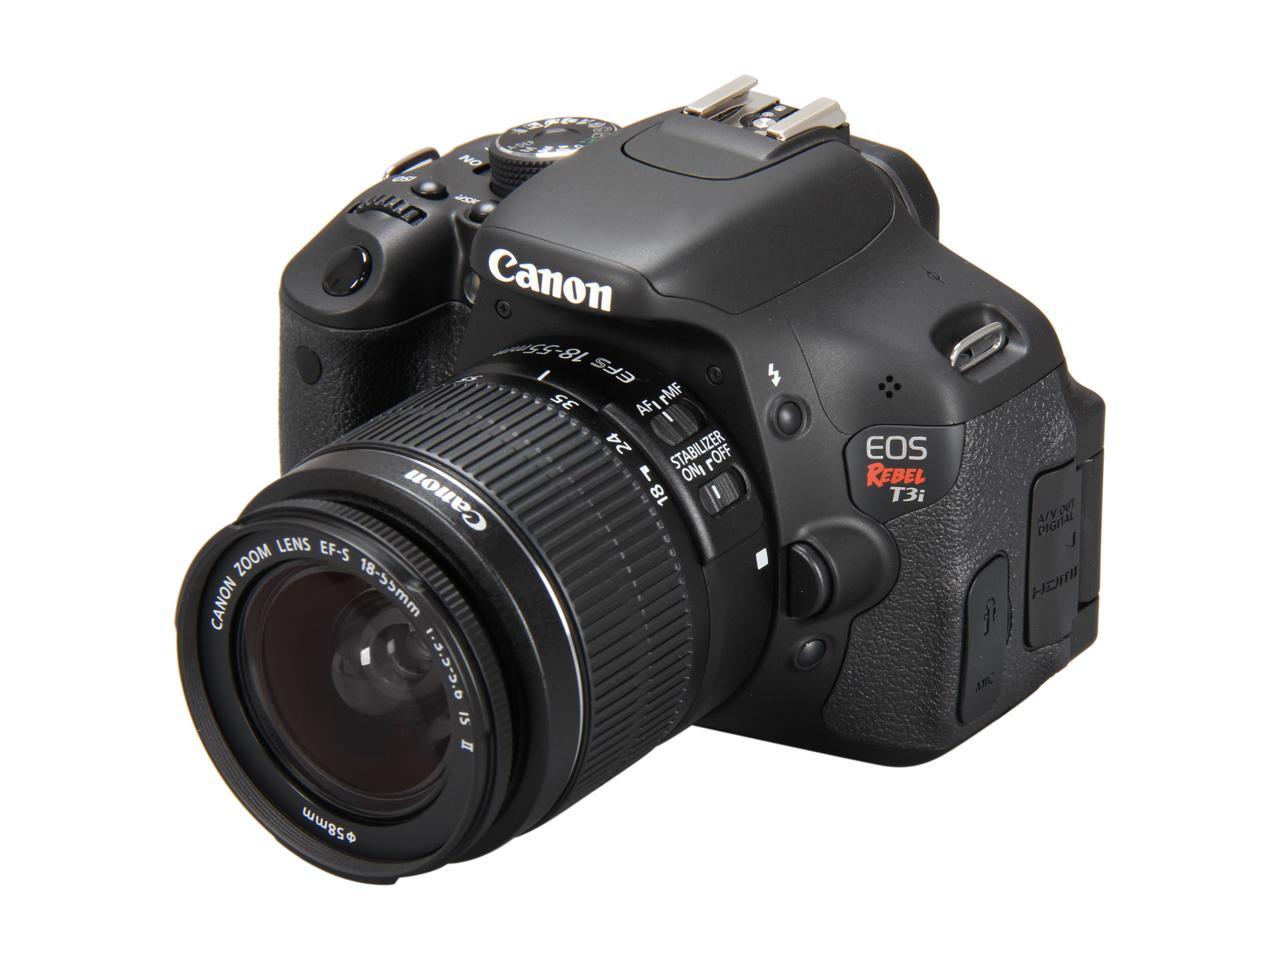 canon eos rebel t3i digital camera kit best buy